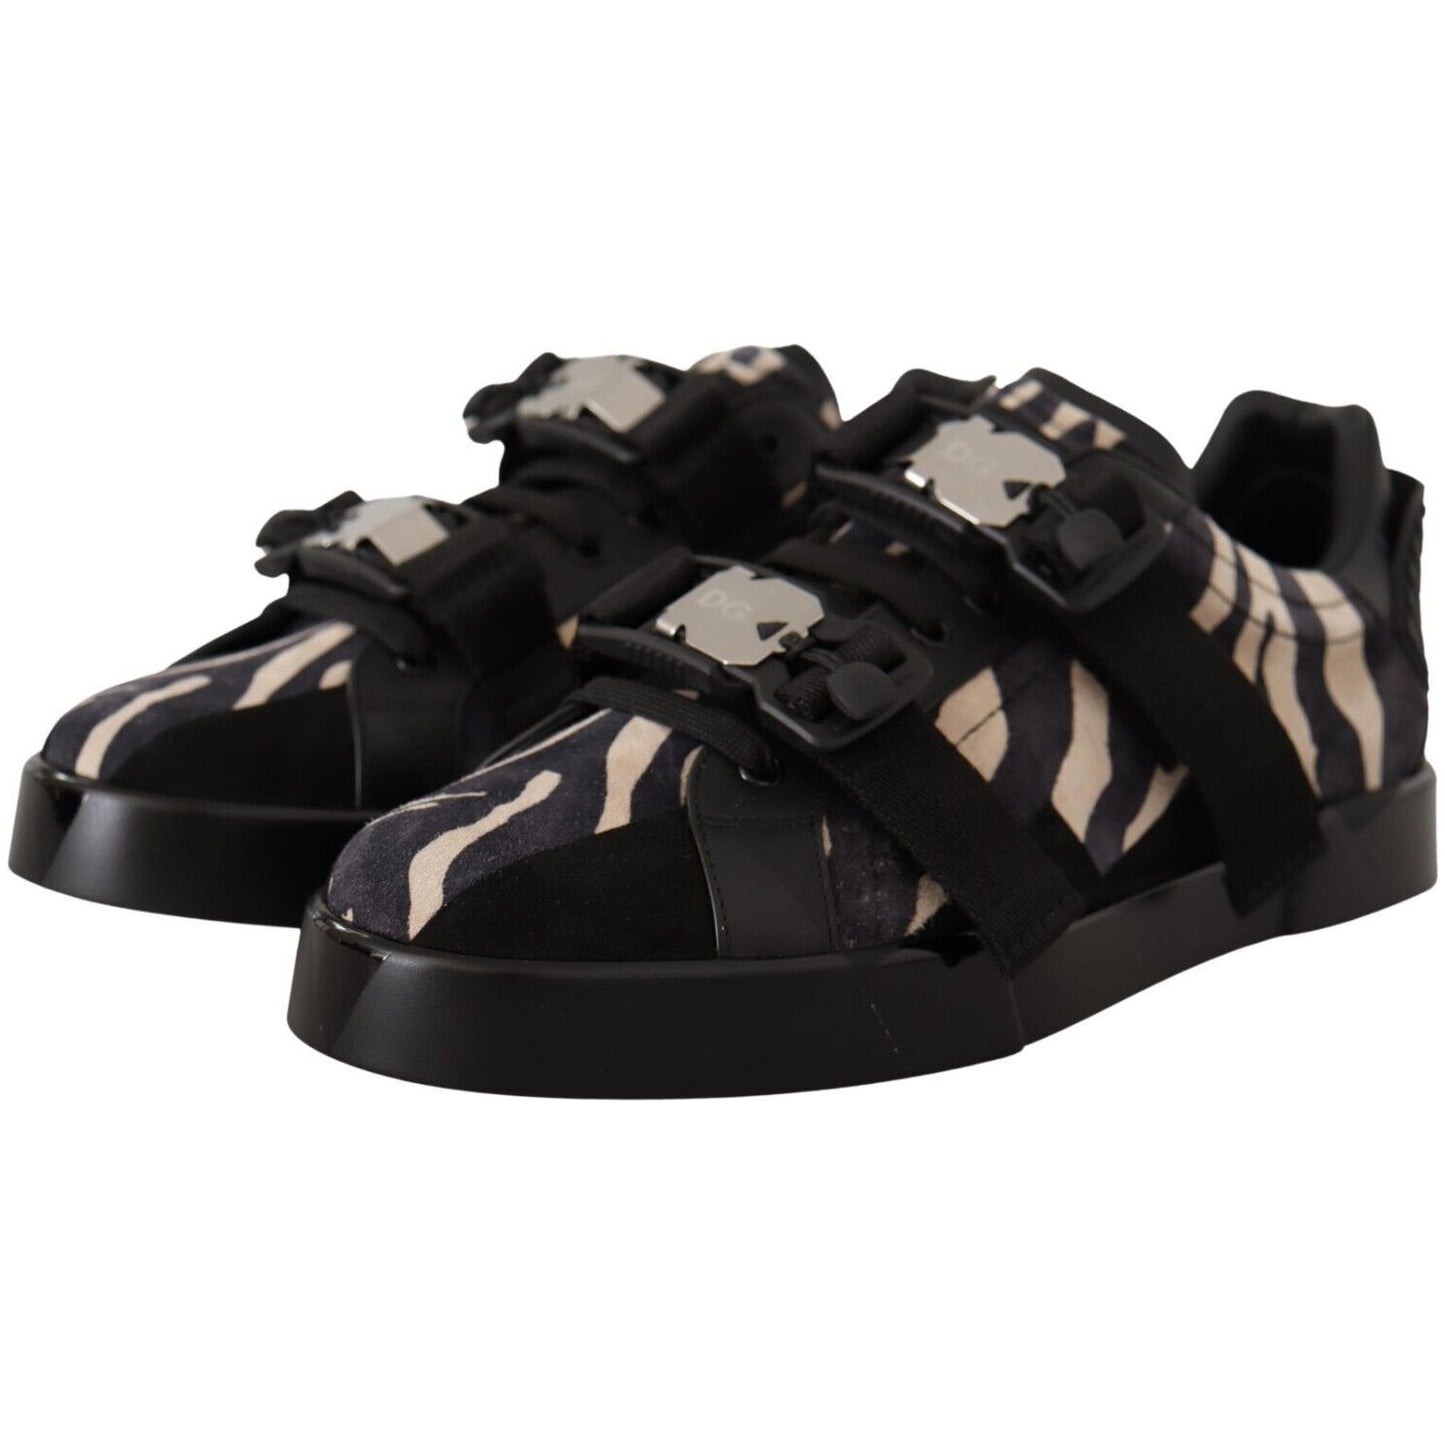 Dolce & Gabbana Zebra Suede Low Top Fashion Sneakers black-white-zebra-suede-rubber-sneakers-shoes-2 MAN SNEAKERS s-l1600-7-5-98871ee2-1dd.jpg